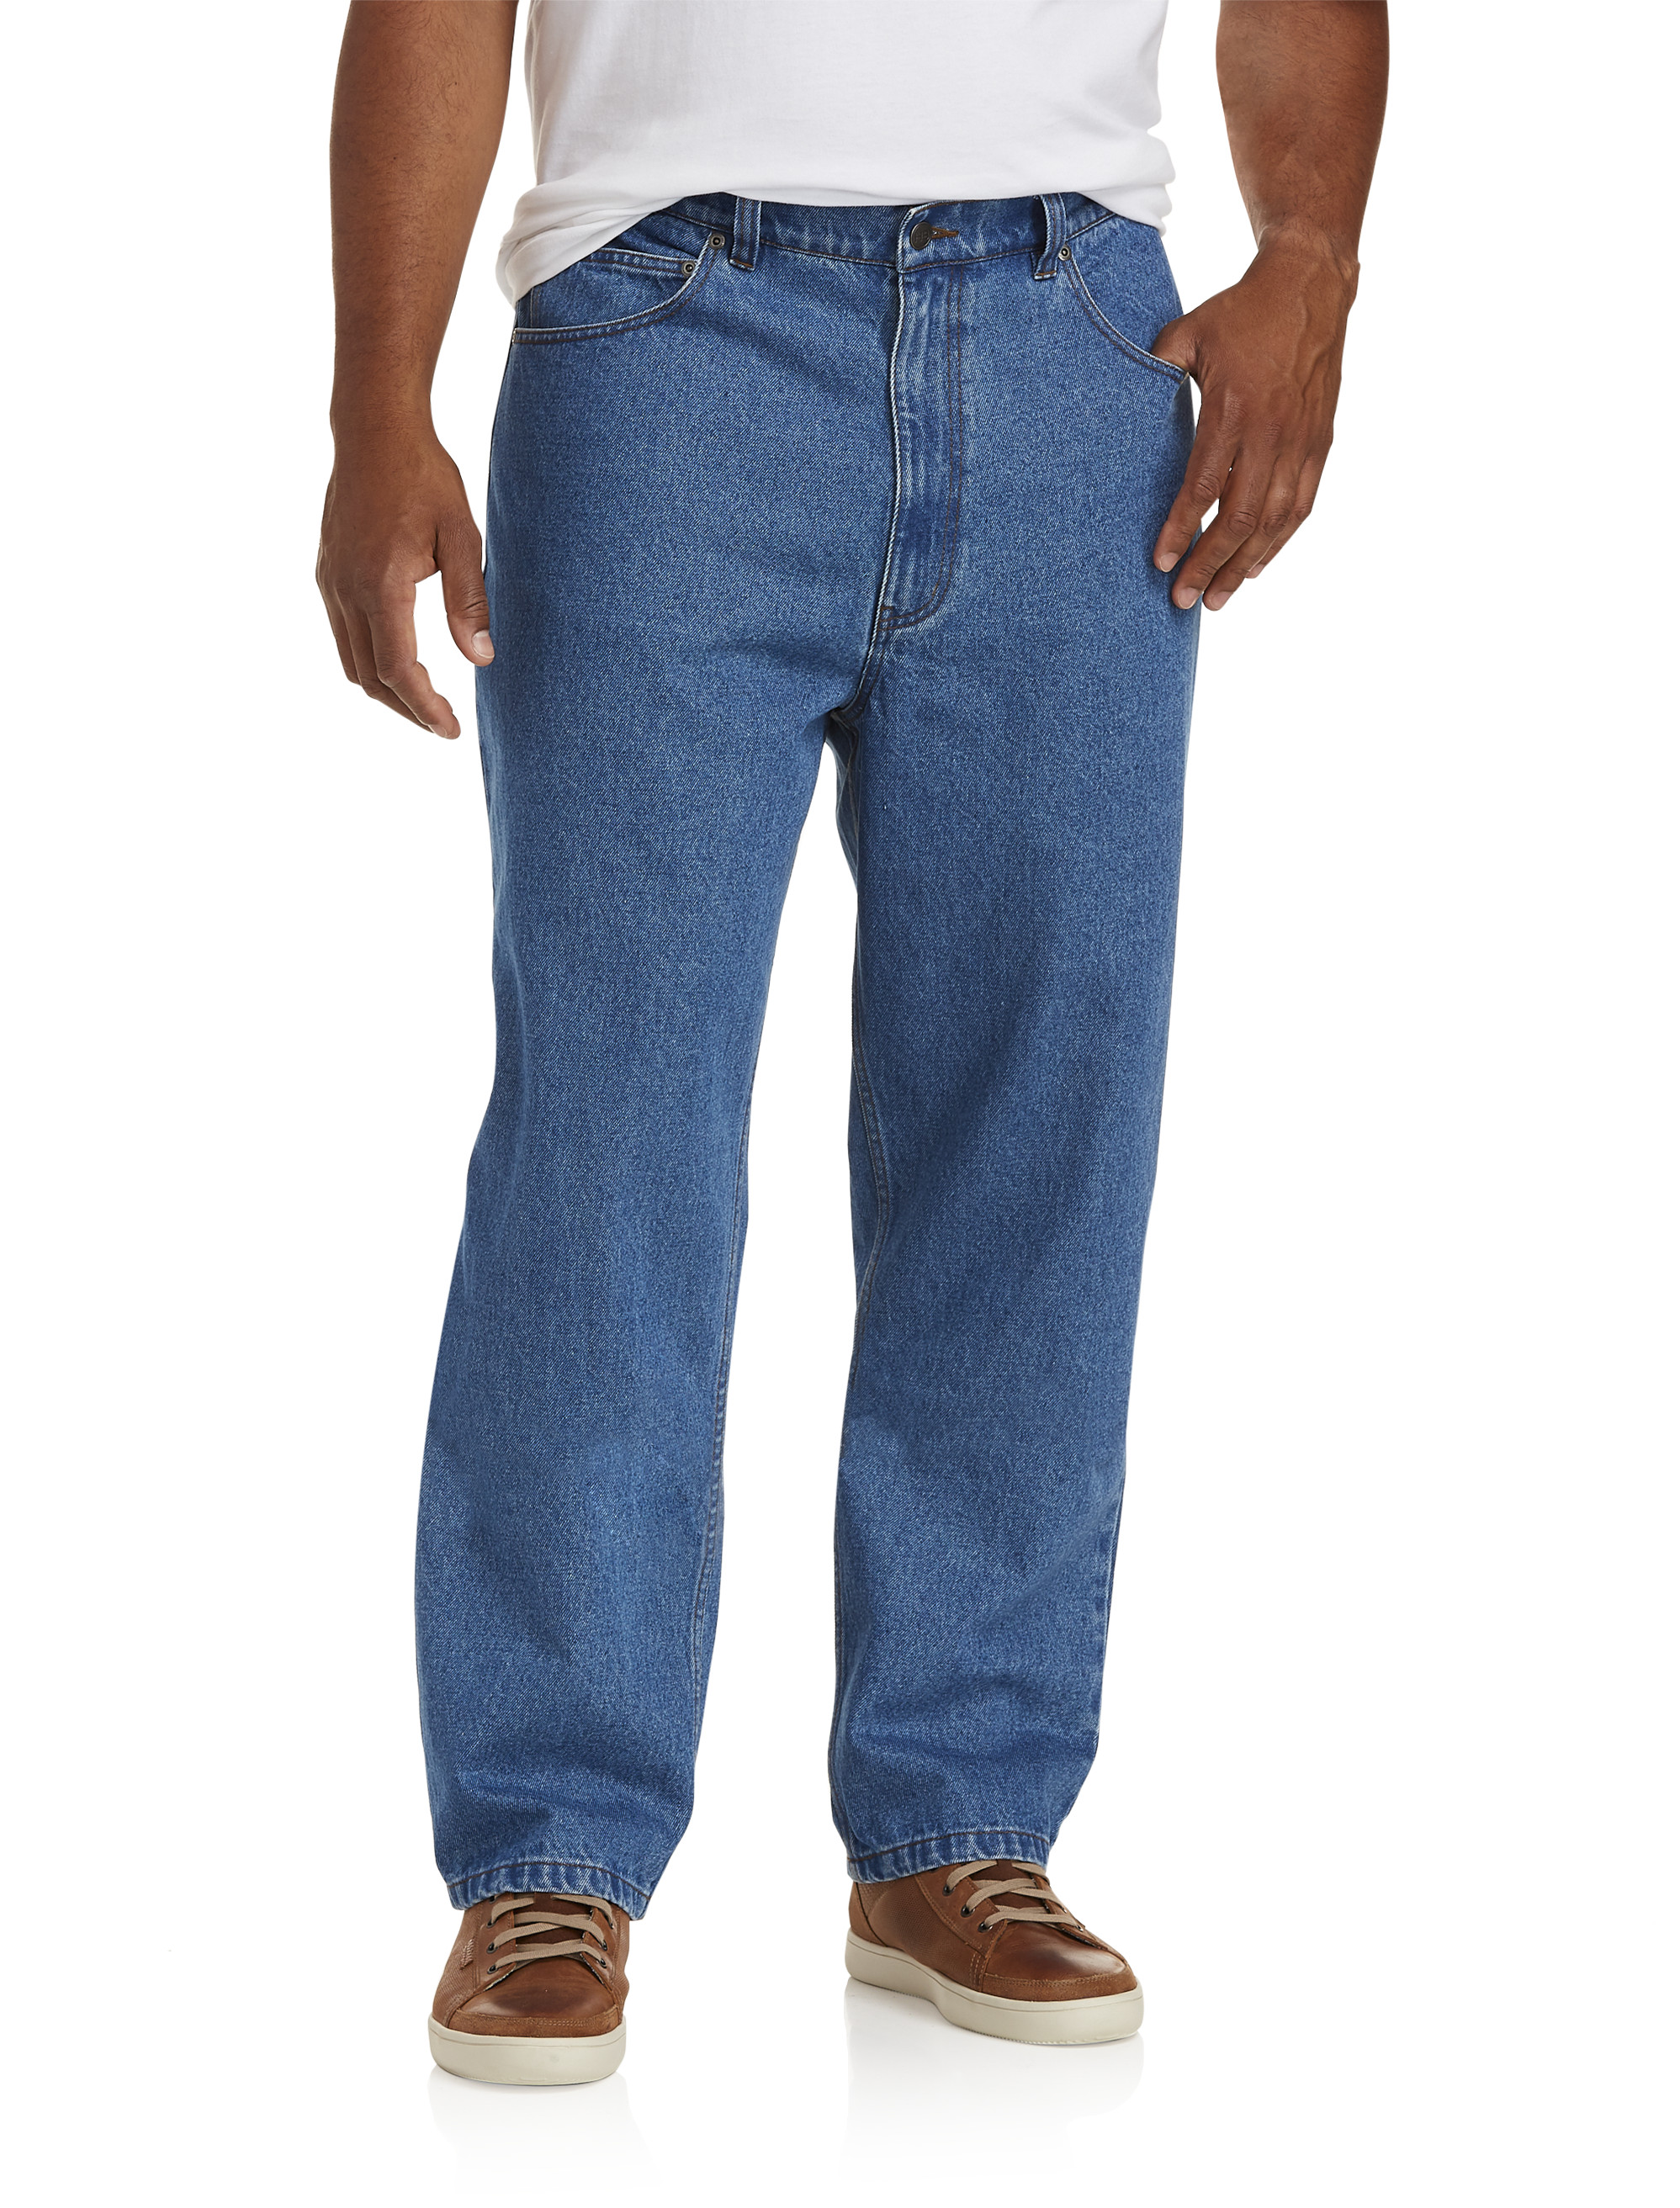 Carhartt Men's Rugged Flex Relaxed Fit 5-Pocket Jean BIG & TALL